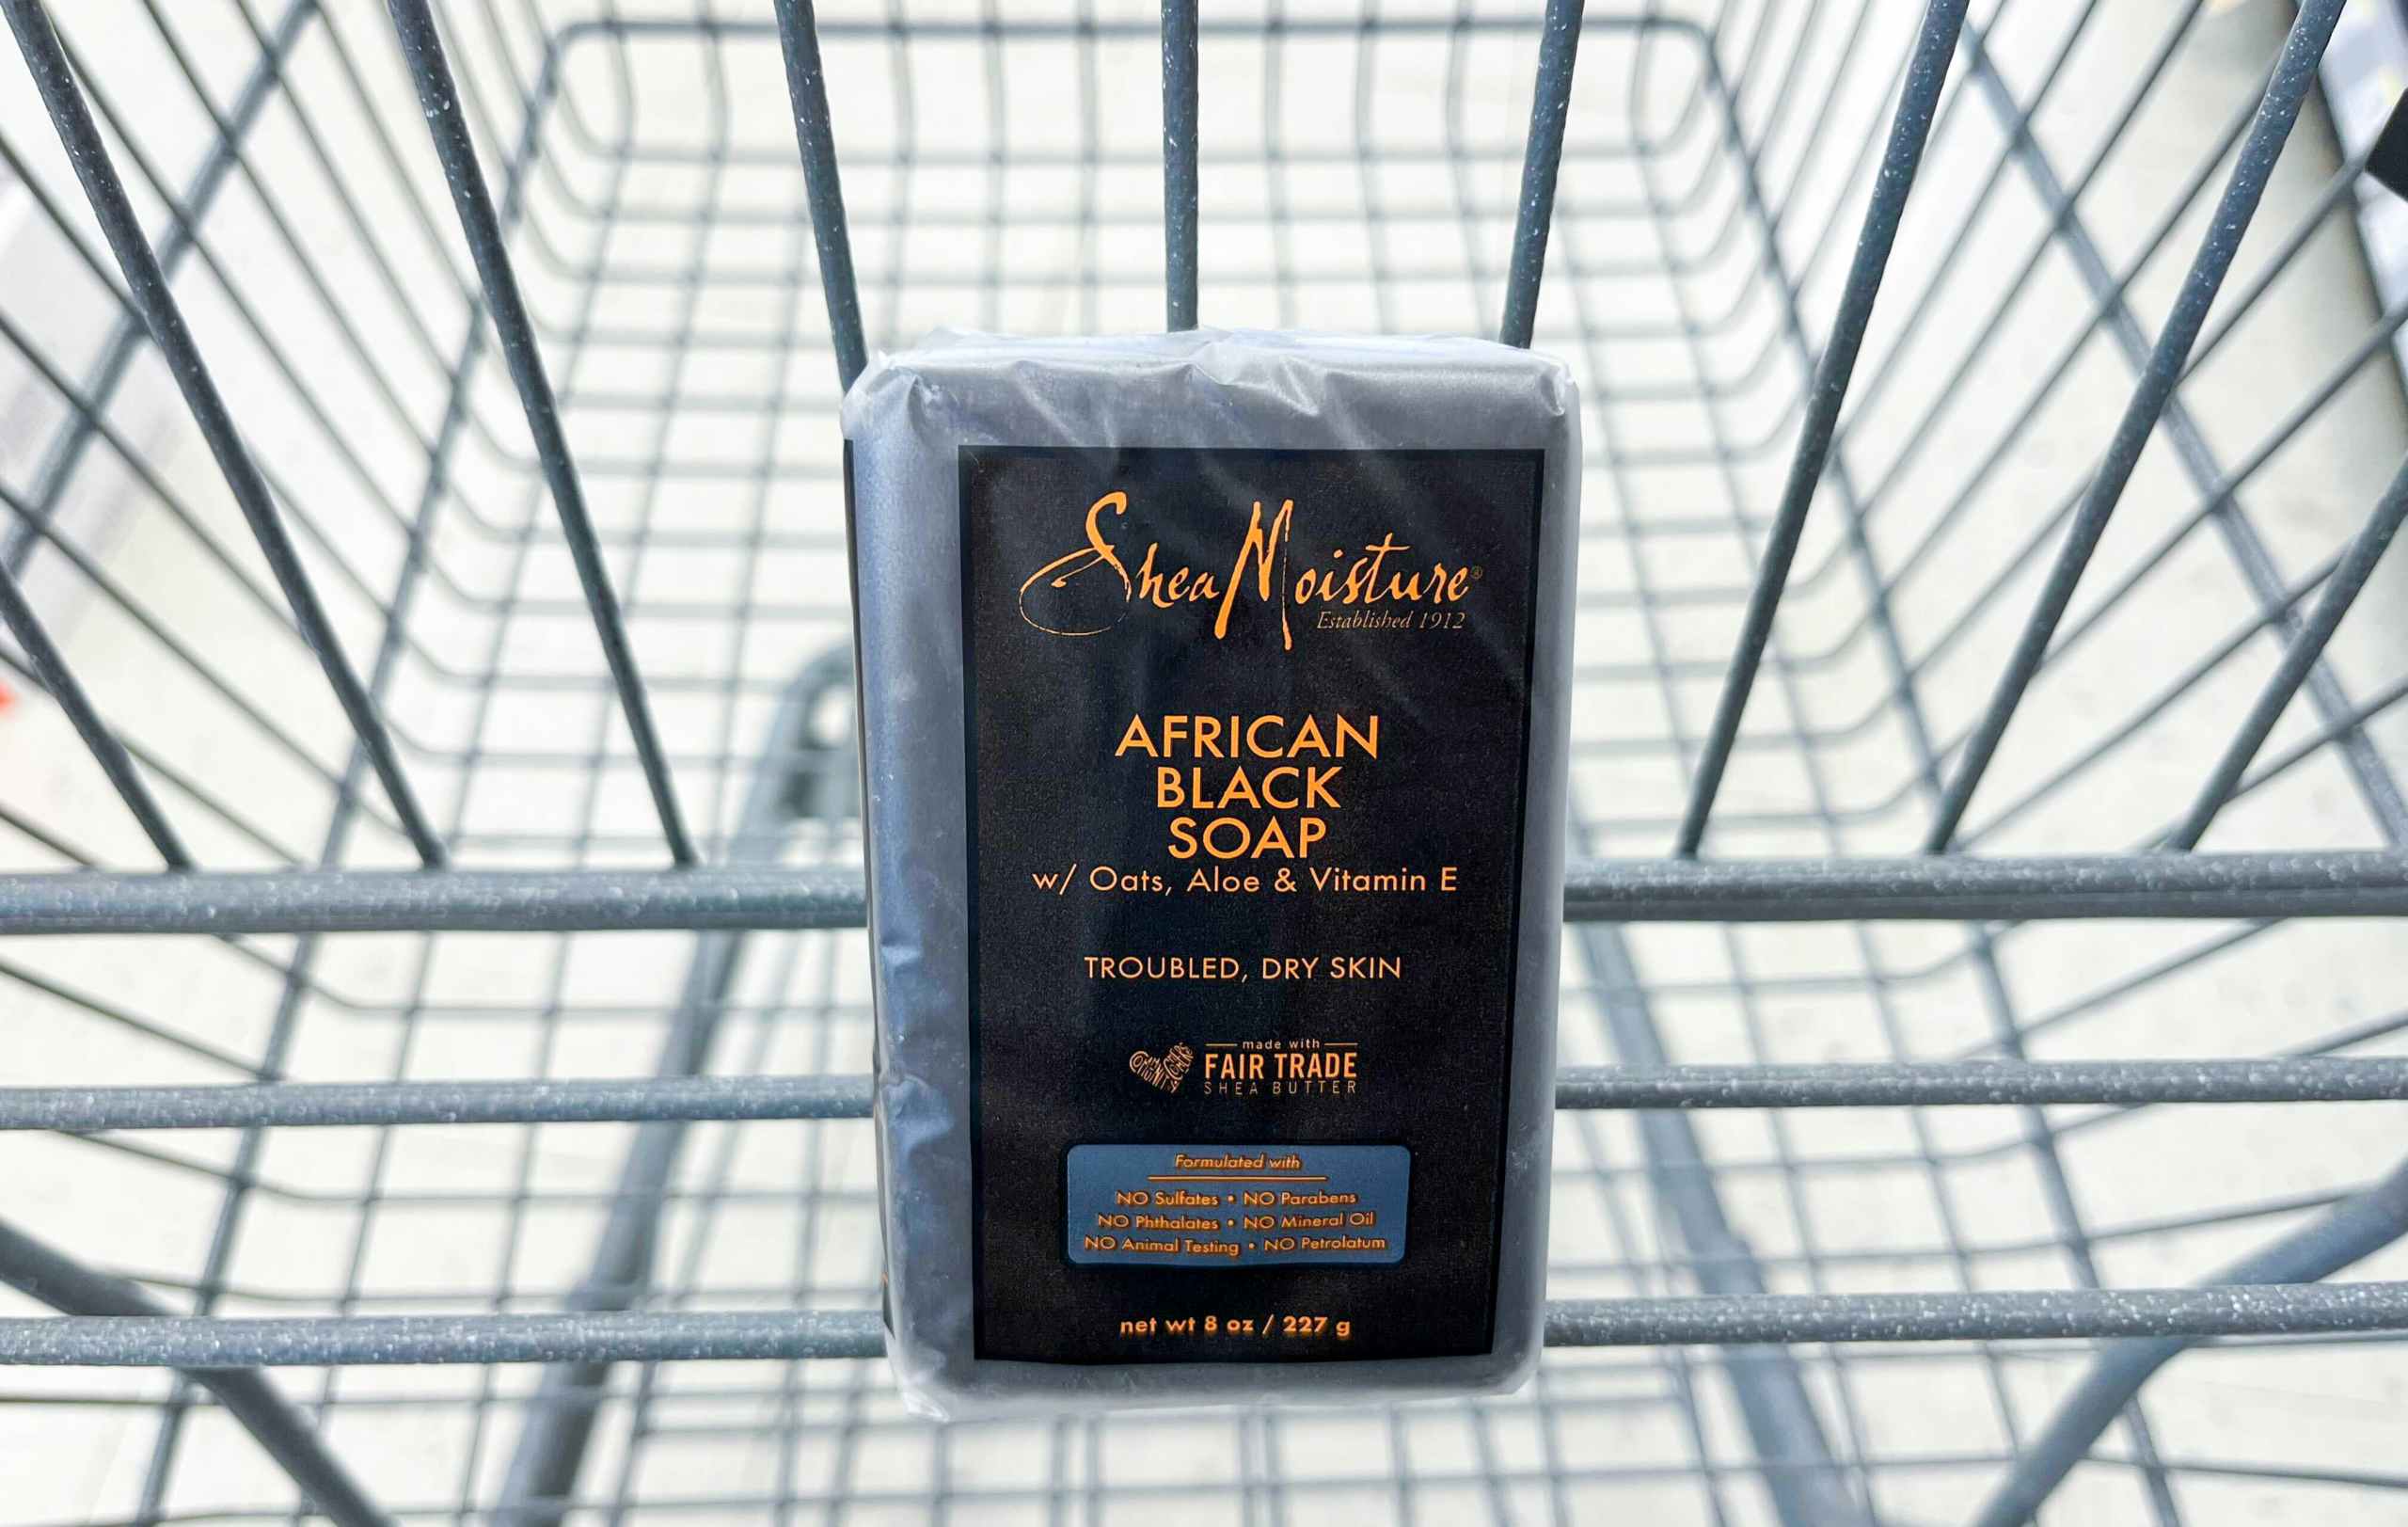 SheaMoisture African Black Soap bar inside of shopping cart